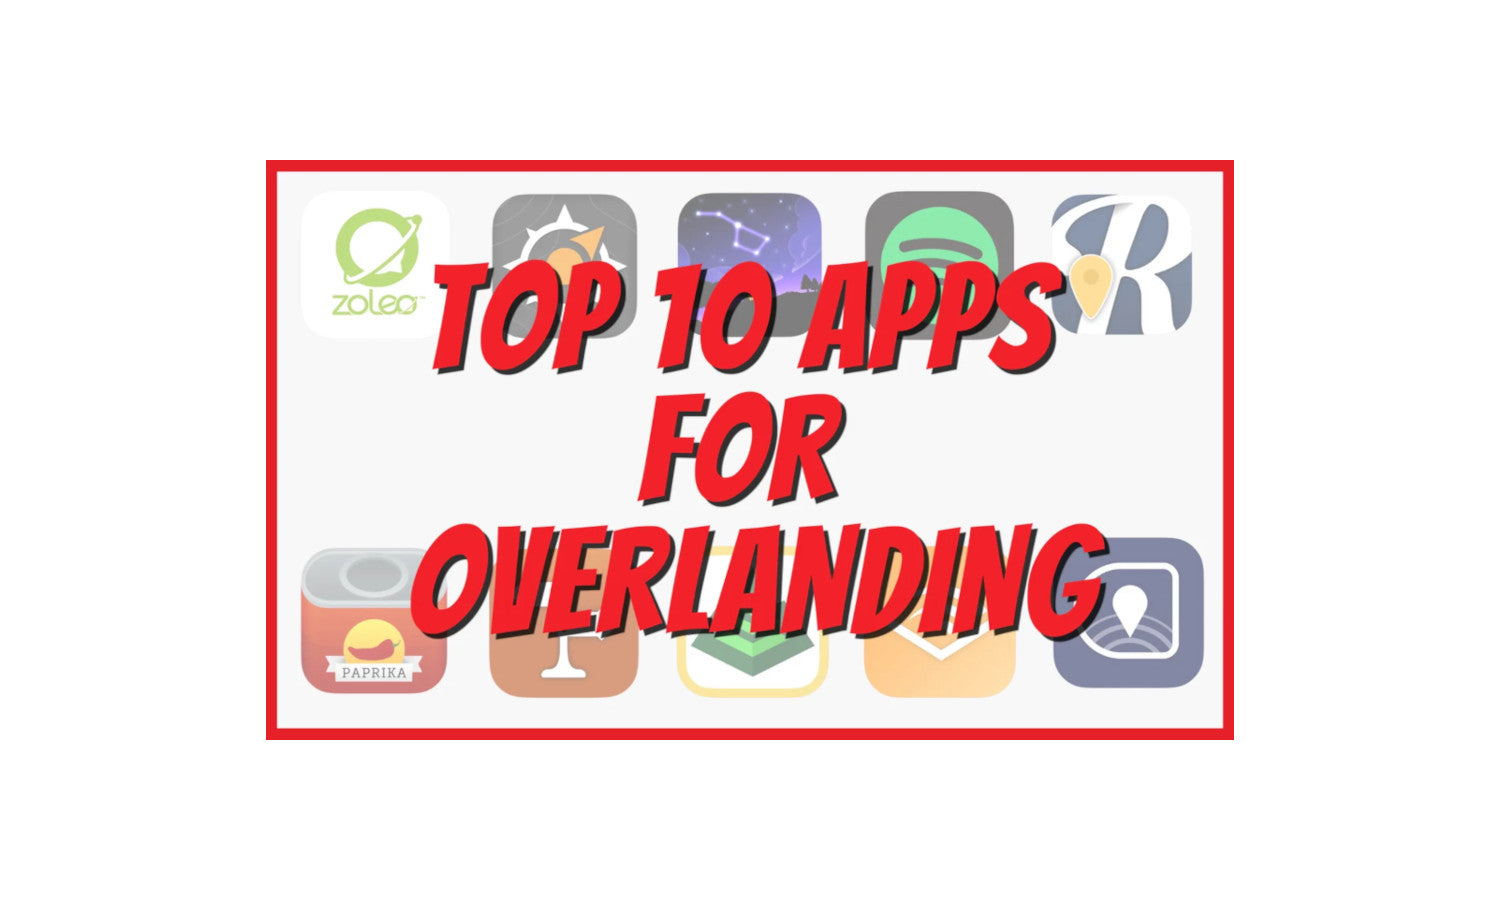 Top 10 Apps for Overlanding